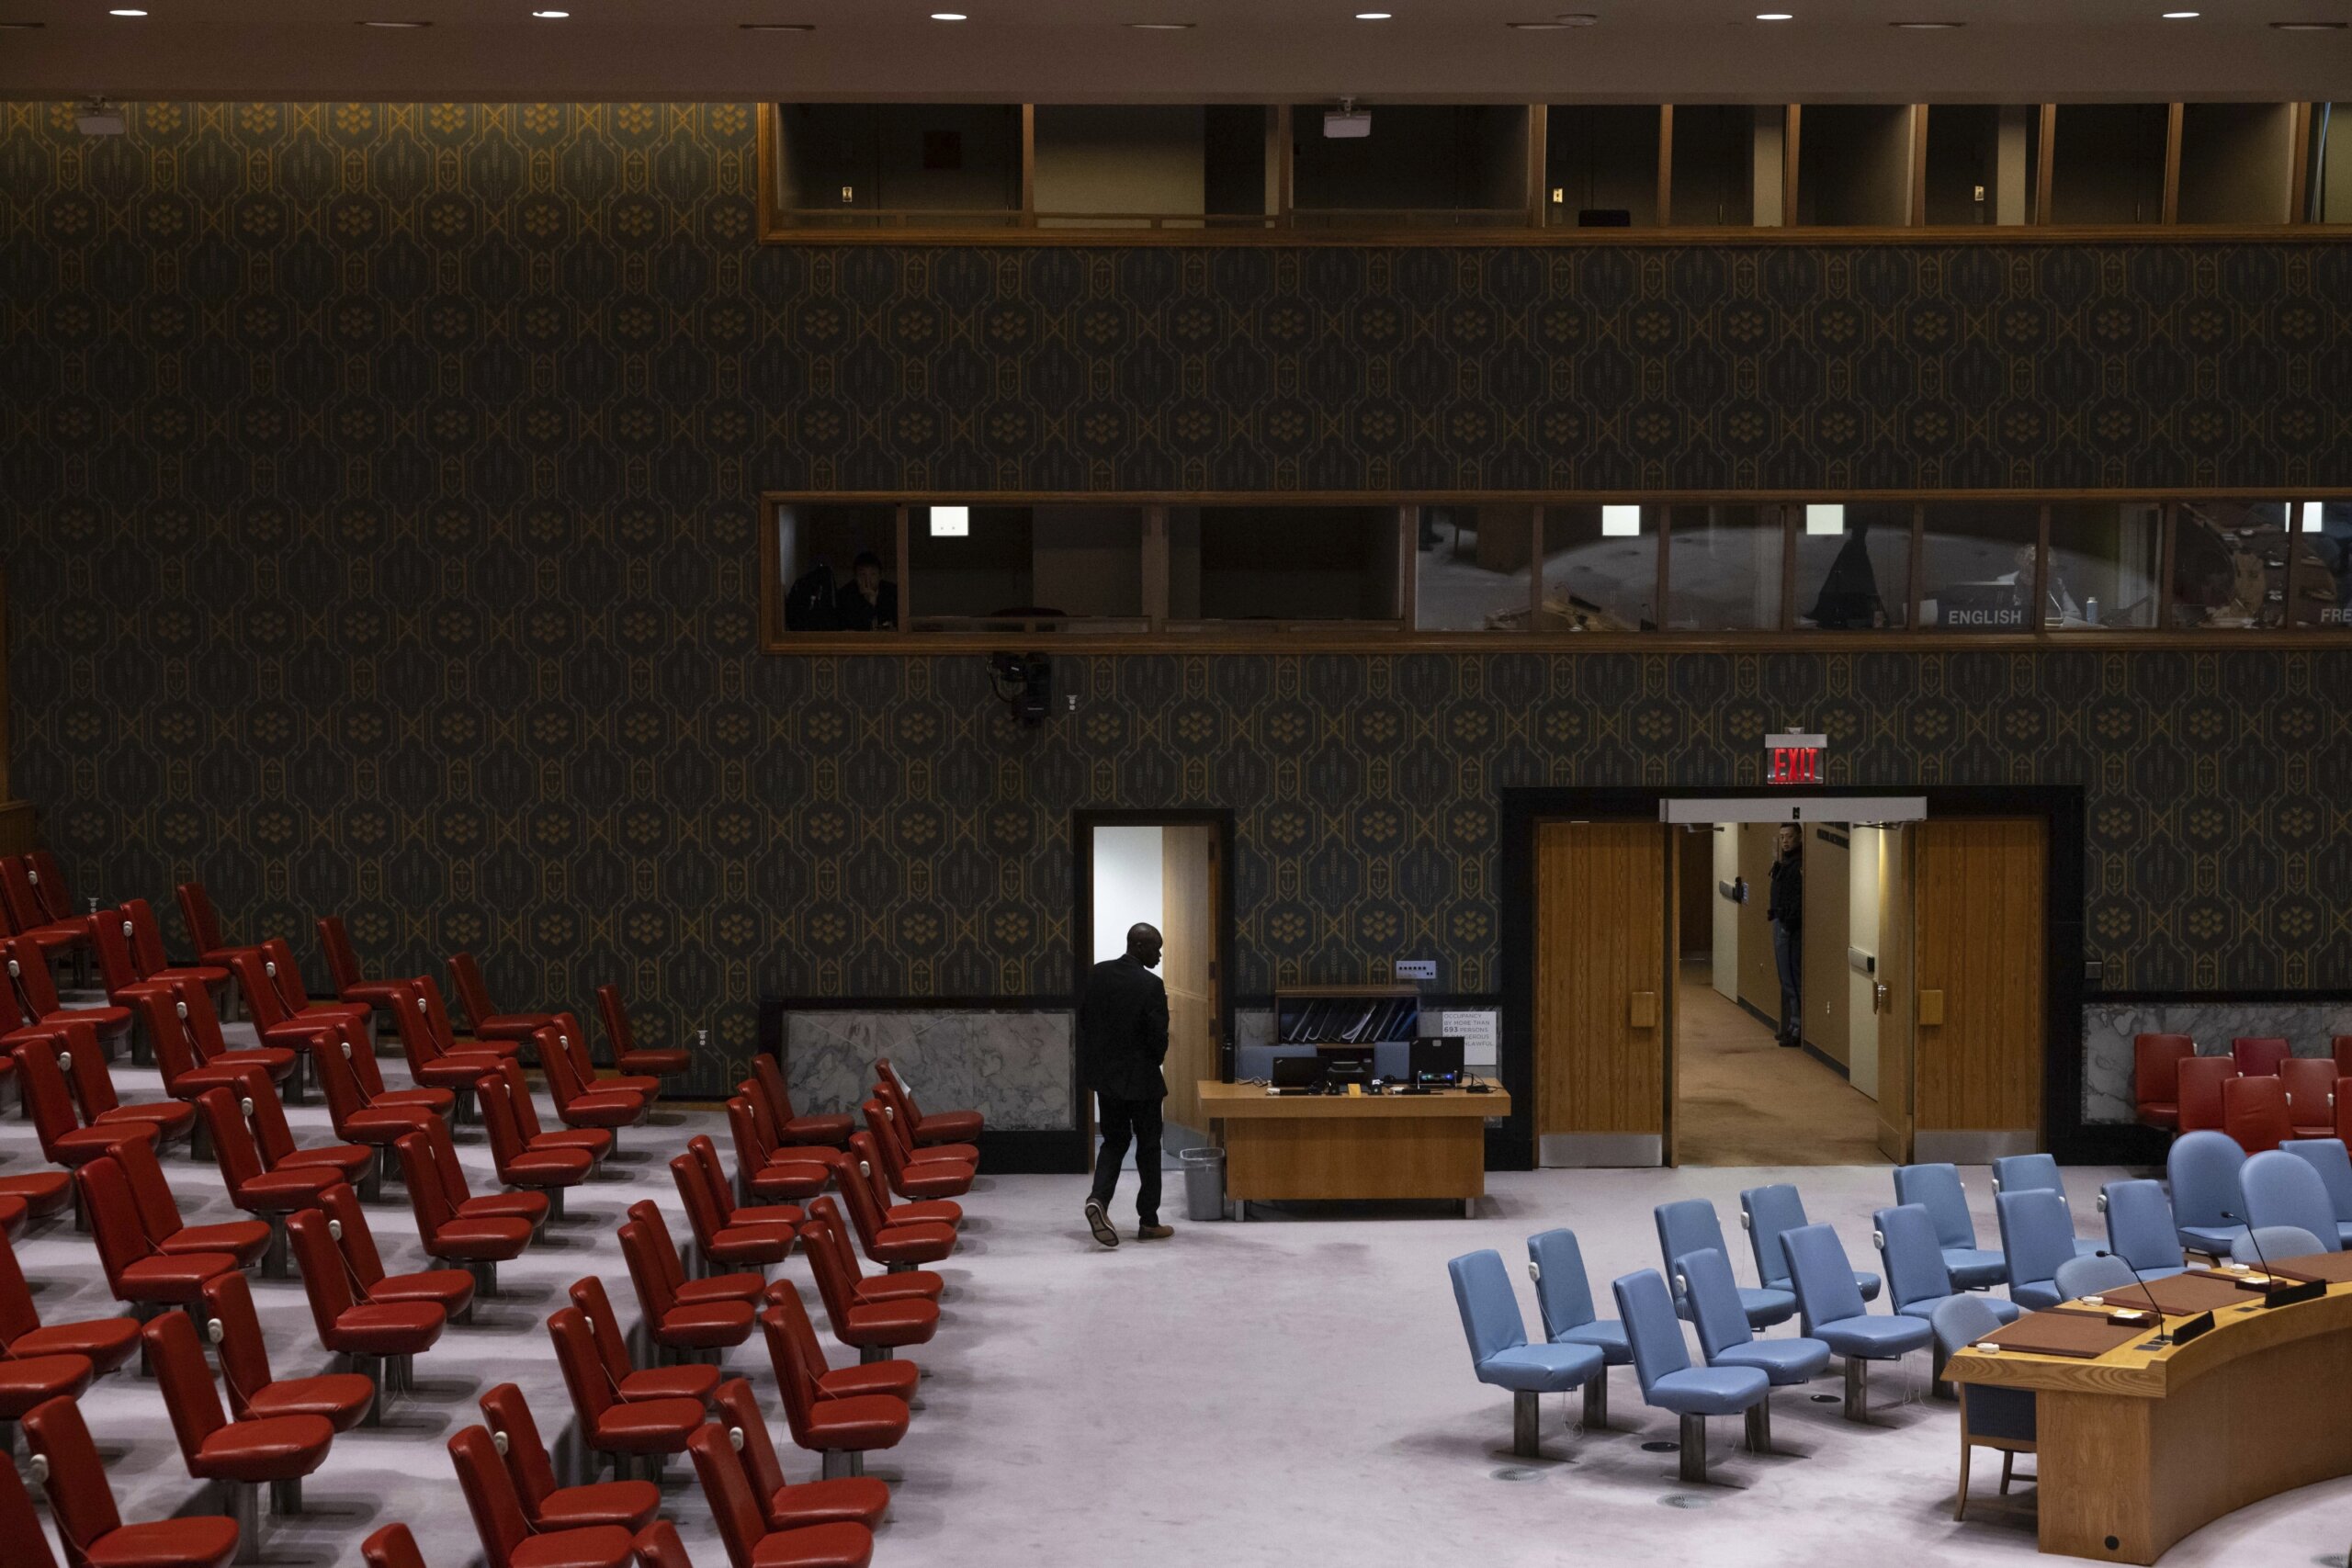 UN Security Council North Korea